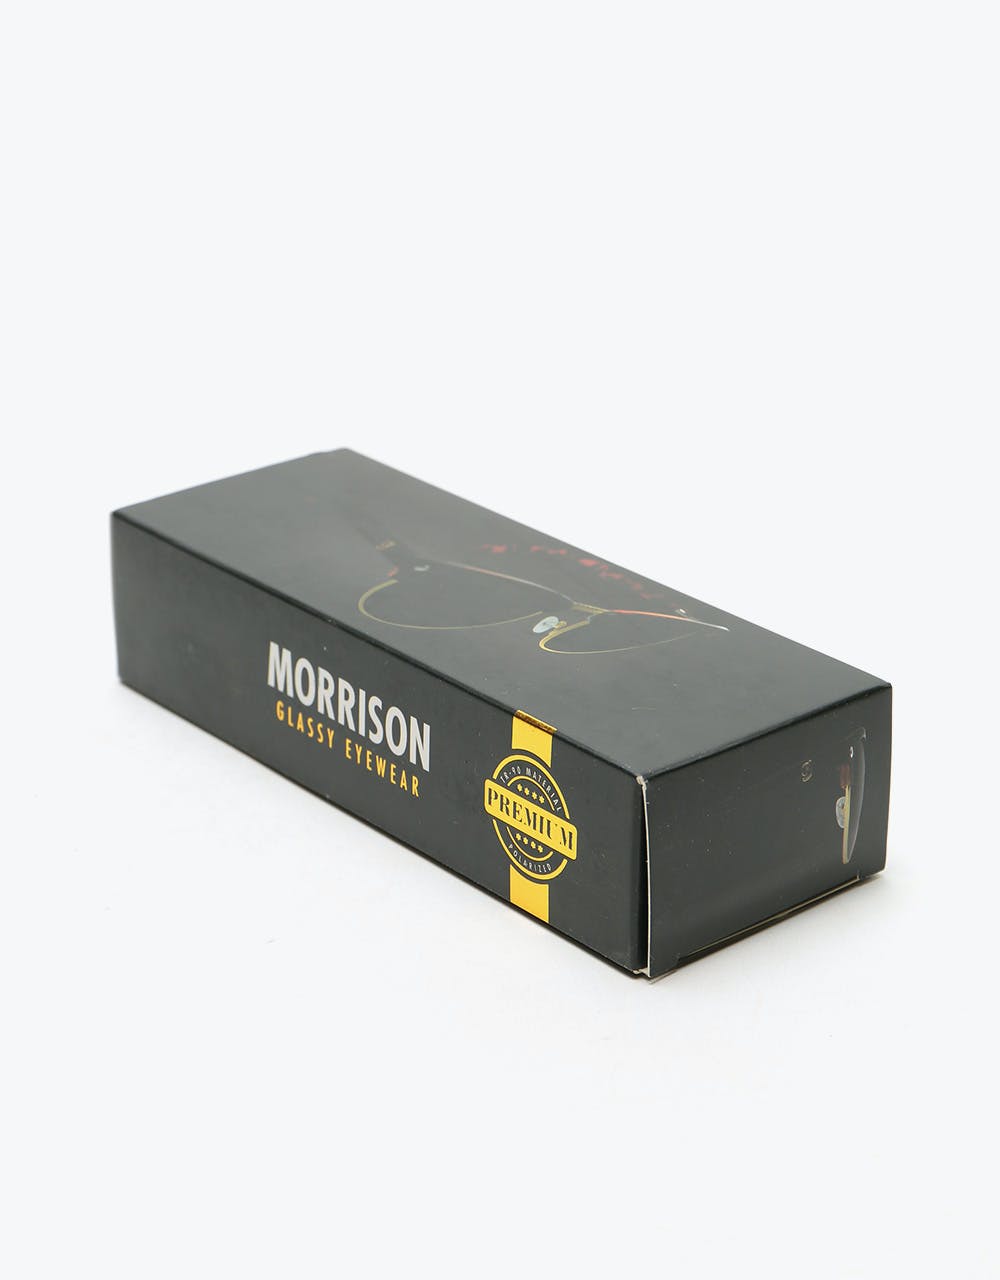 Glassy Sunhater Morrison Premium Polarised Sunglasses - Matte Black